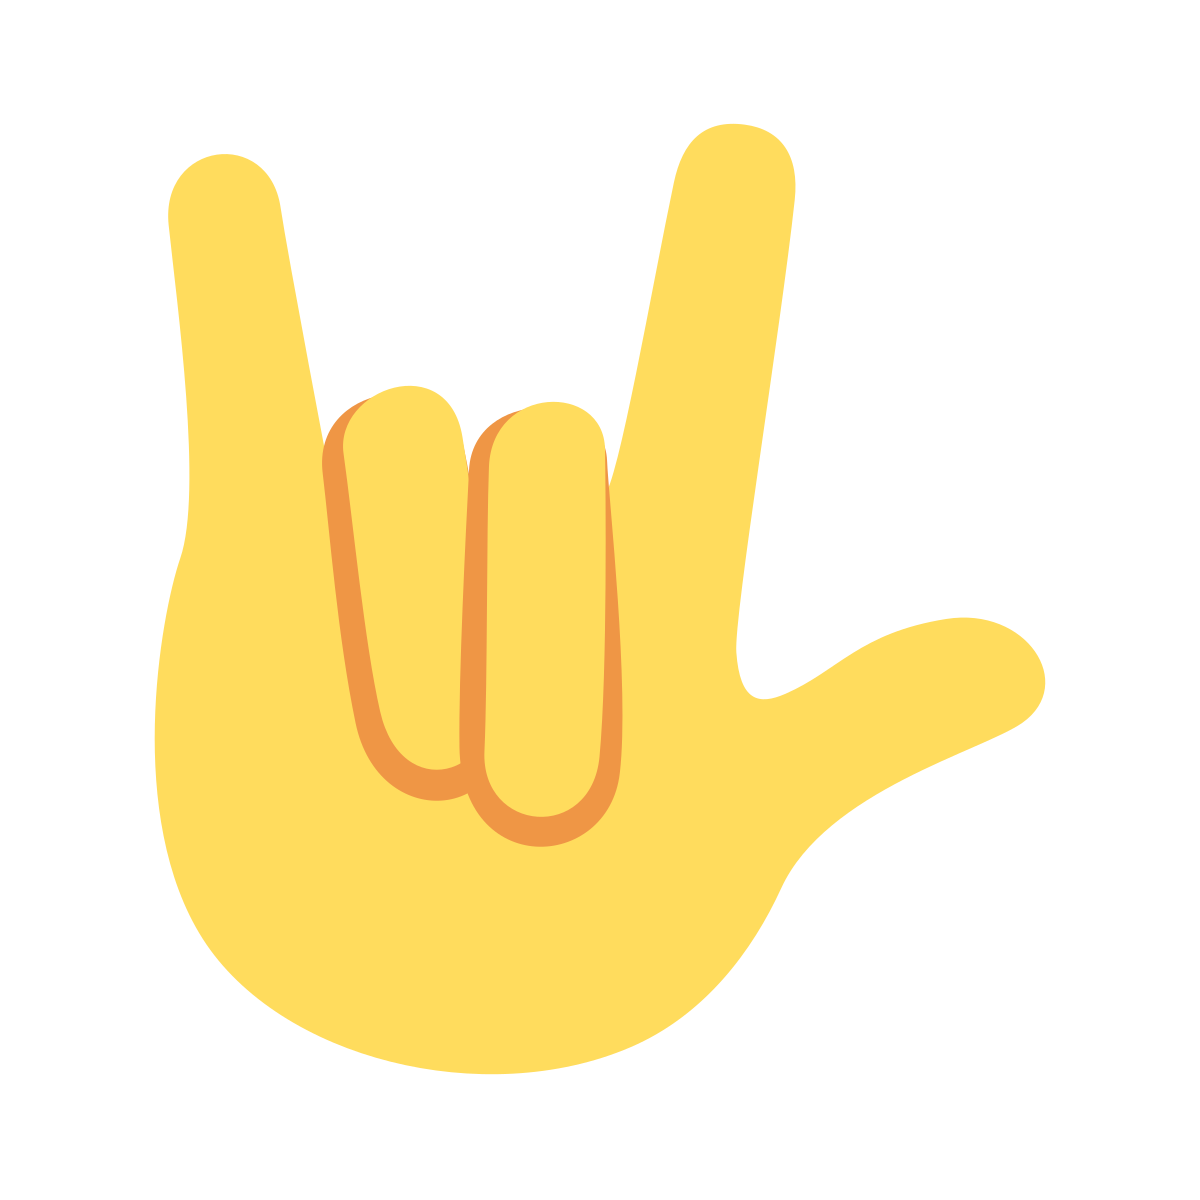 Love You Gesture Emoji What Emoji